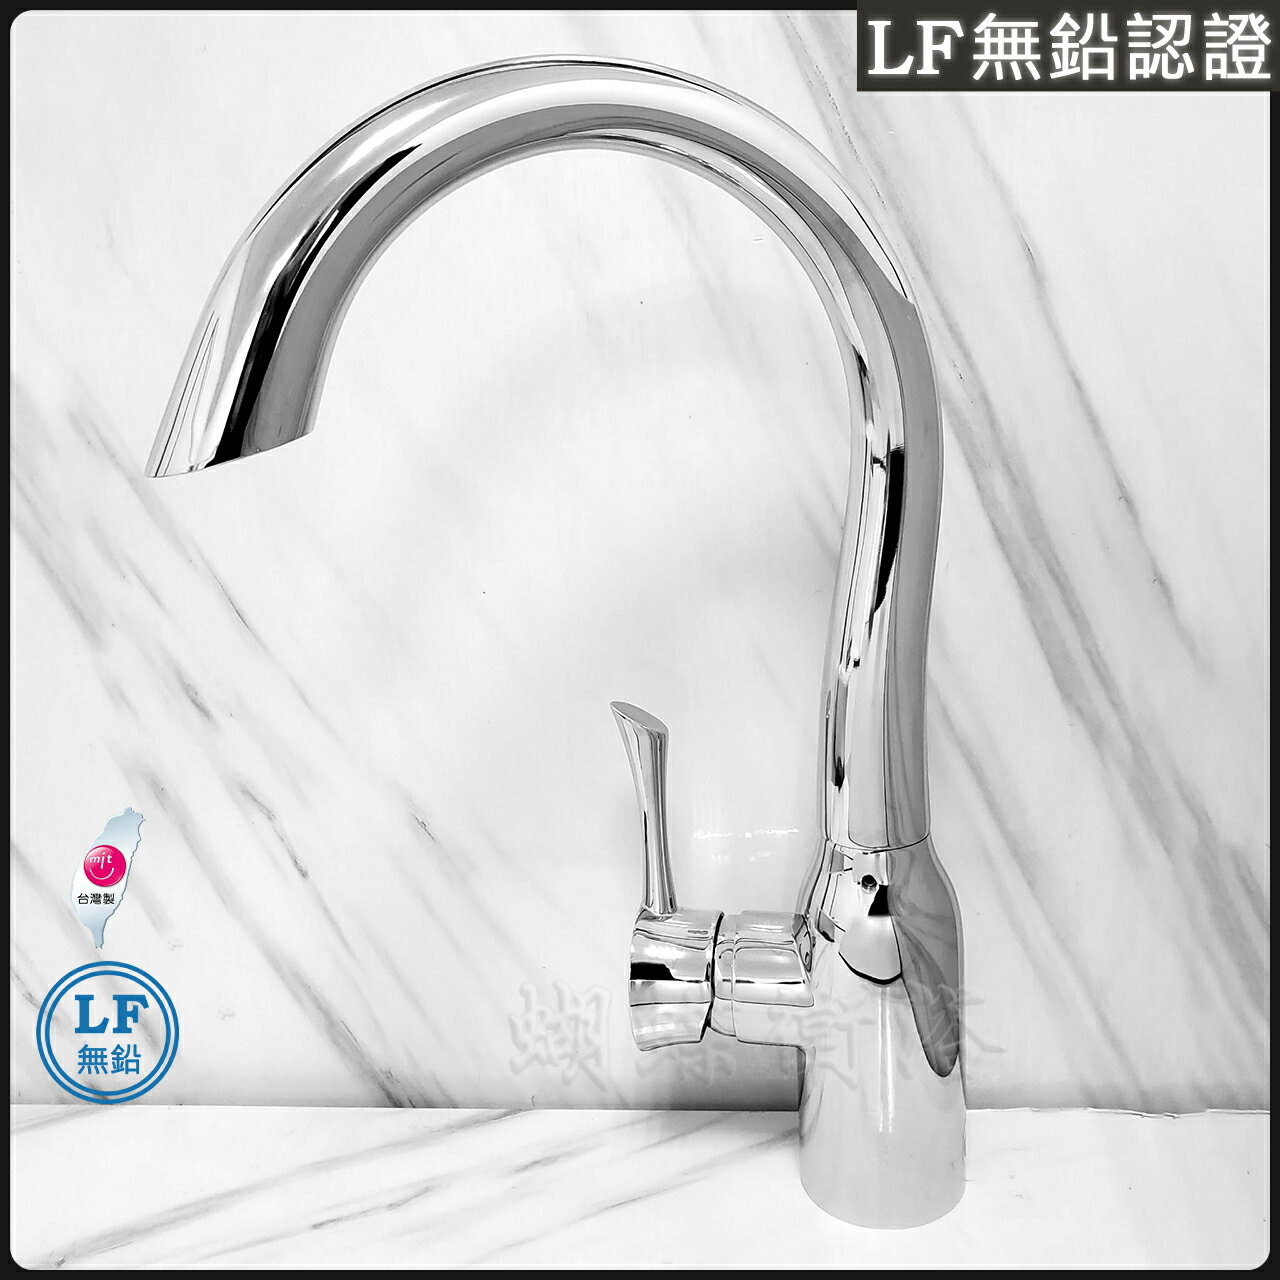 【LF無鉛認證】HK-2118廚房飲水用水龍頭.MIT台灣製造.通過CNS8088認證.專利酒瓶造型